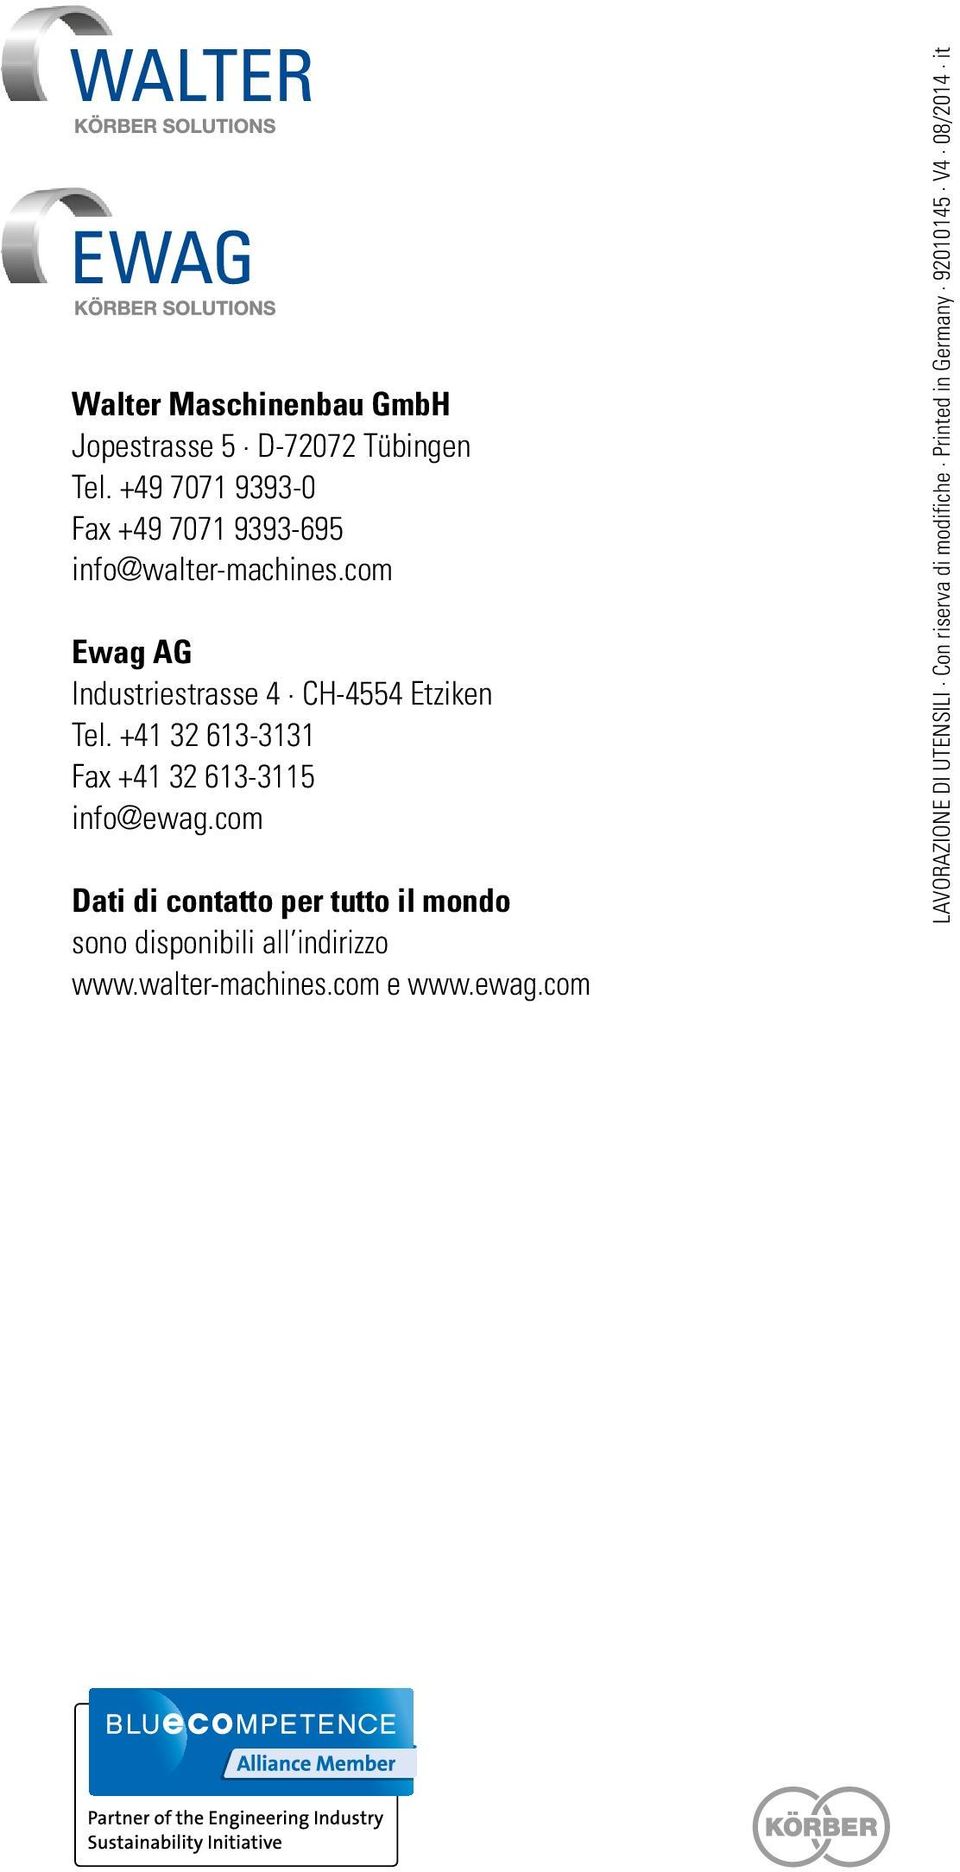 com Ewag AG Industriestrasse 4 CH-4554 Etziken Tel. +41 32 613-3131 Fax +41 32 613-3115 info@ewag.